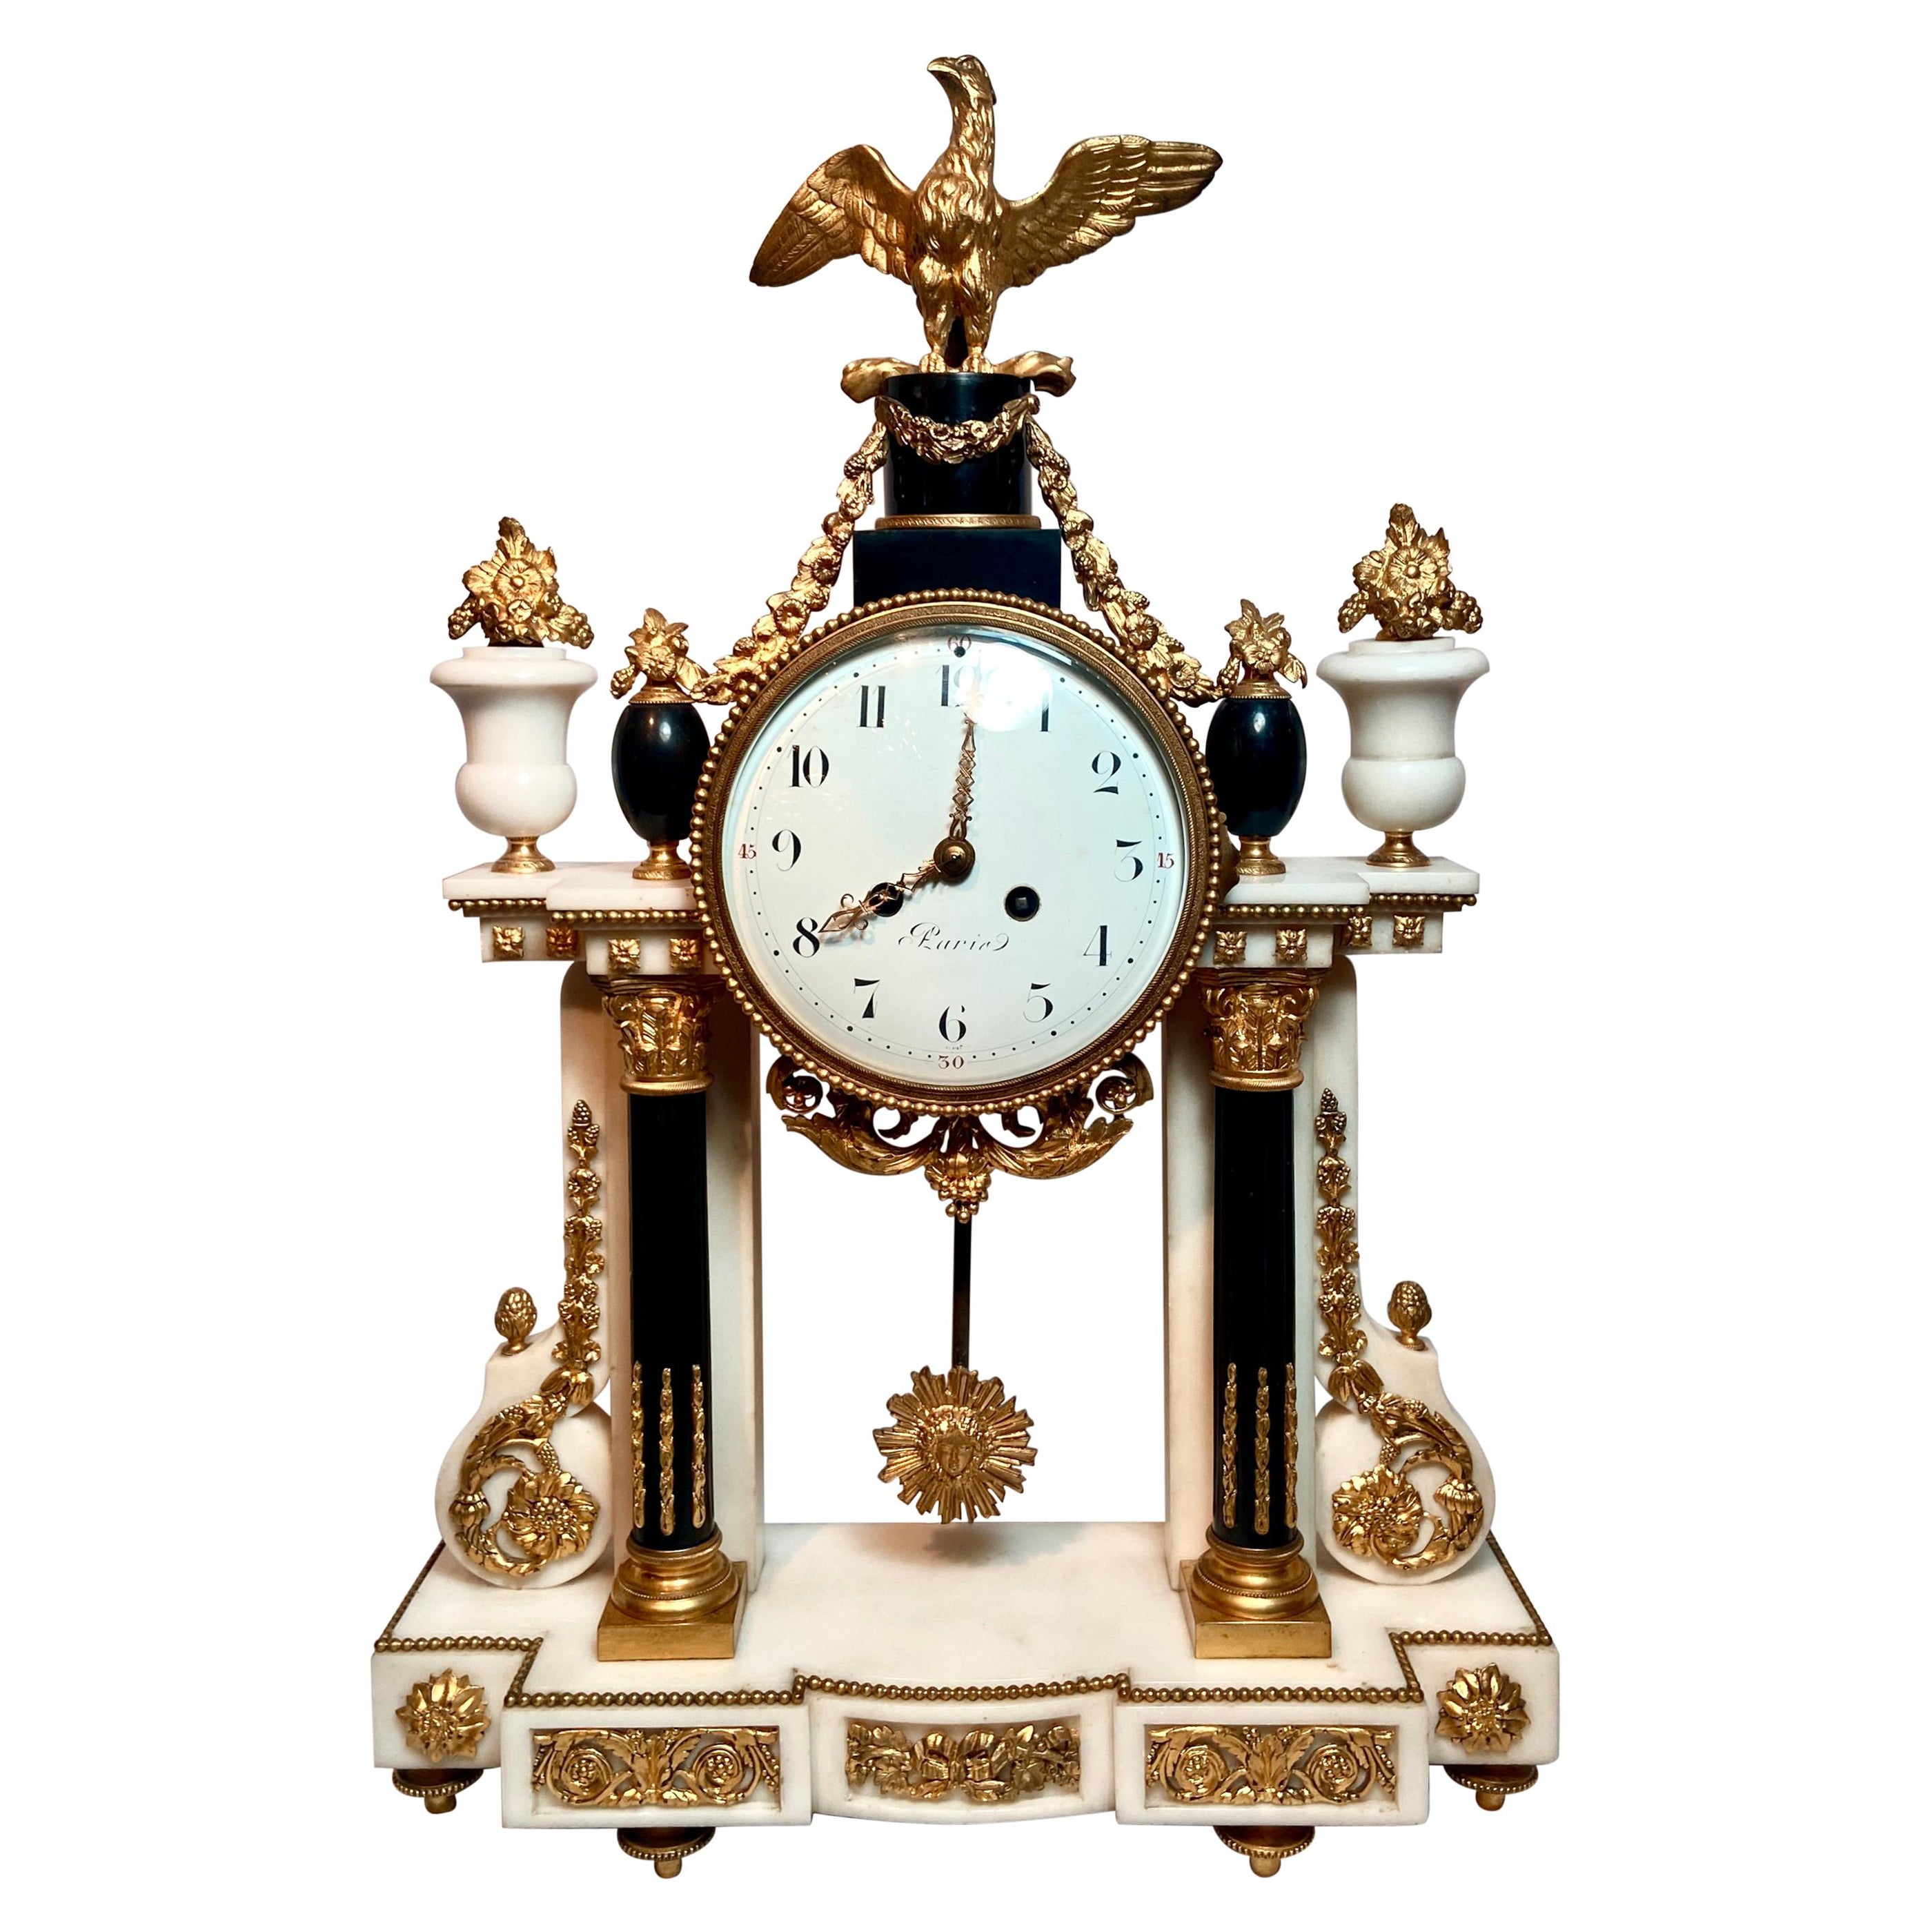 Antique French Louis XVI Ormolu and Marble Mantel Clock, circa 1850-1860